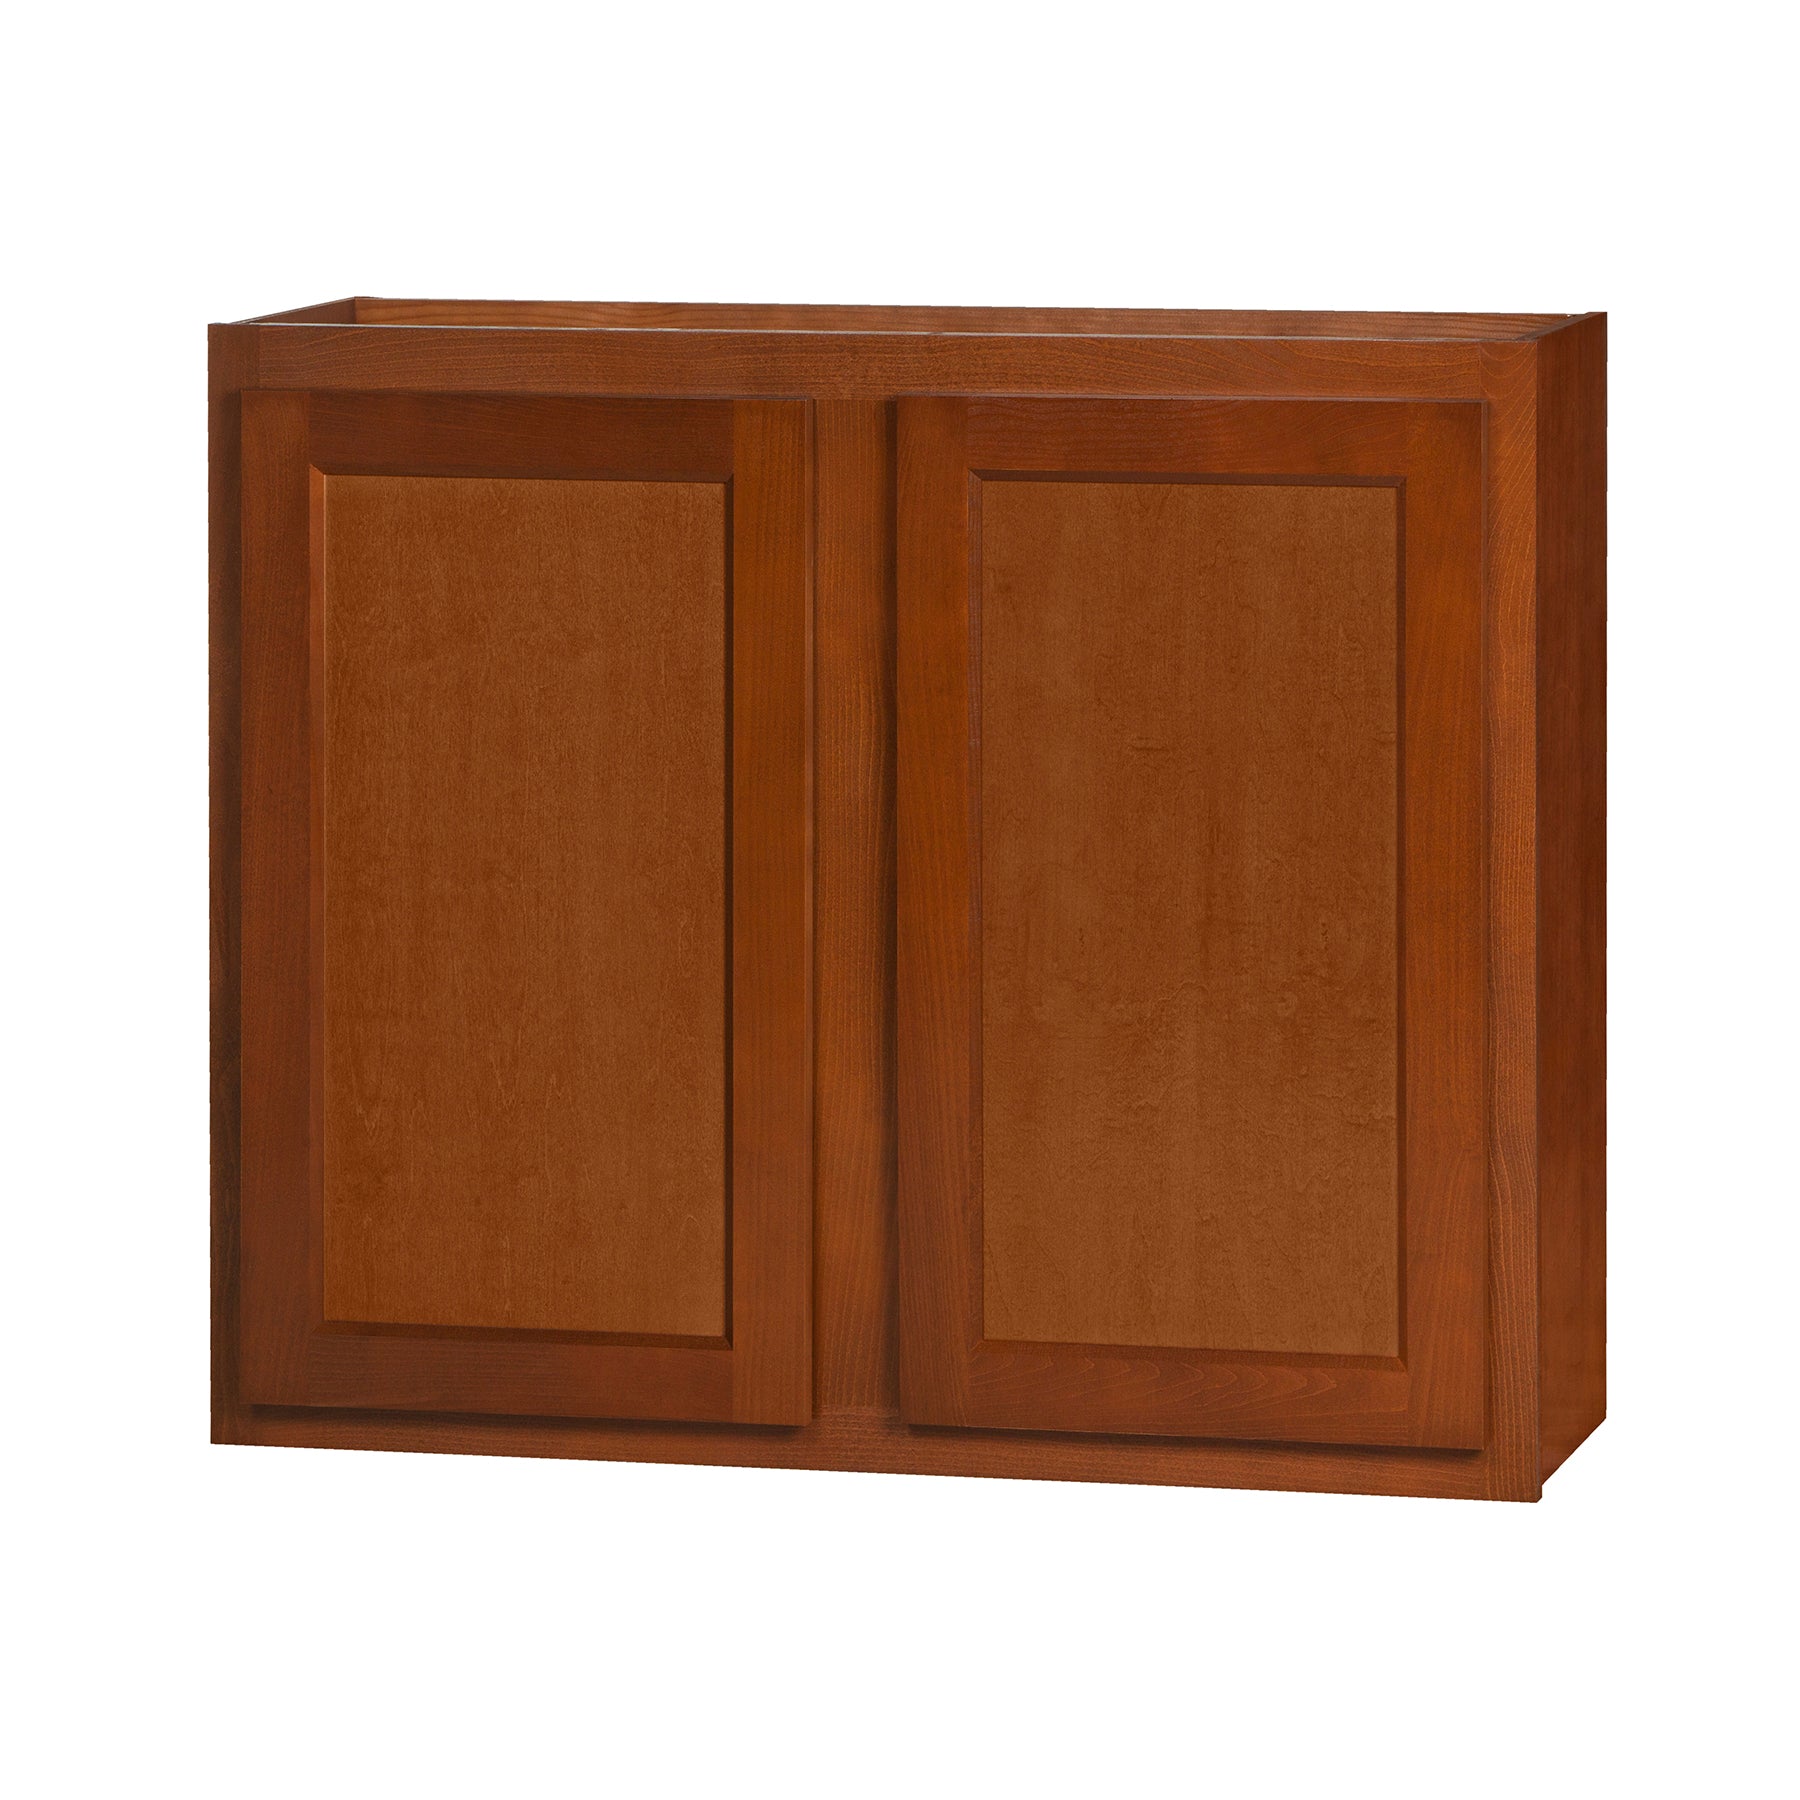 30 inch Wall Cabinets - Glenwood Shaker - 36 Inch W x 30 Inch H x 12 Inch D